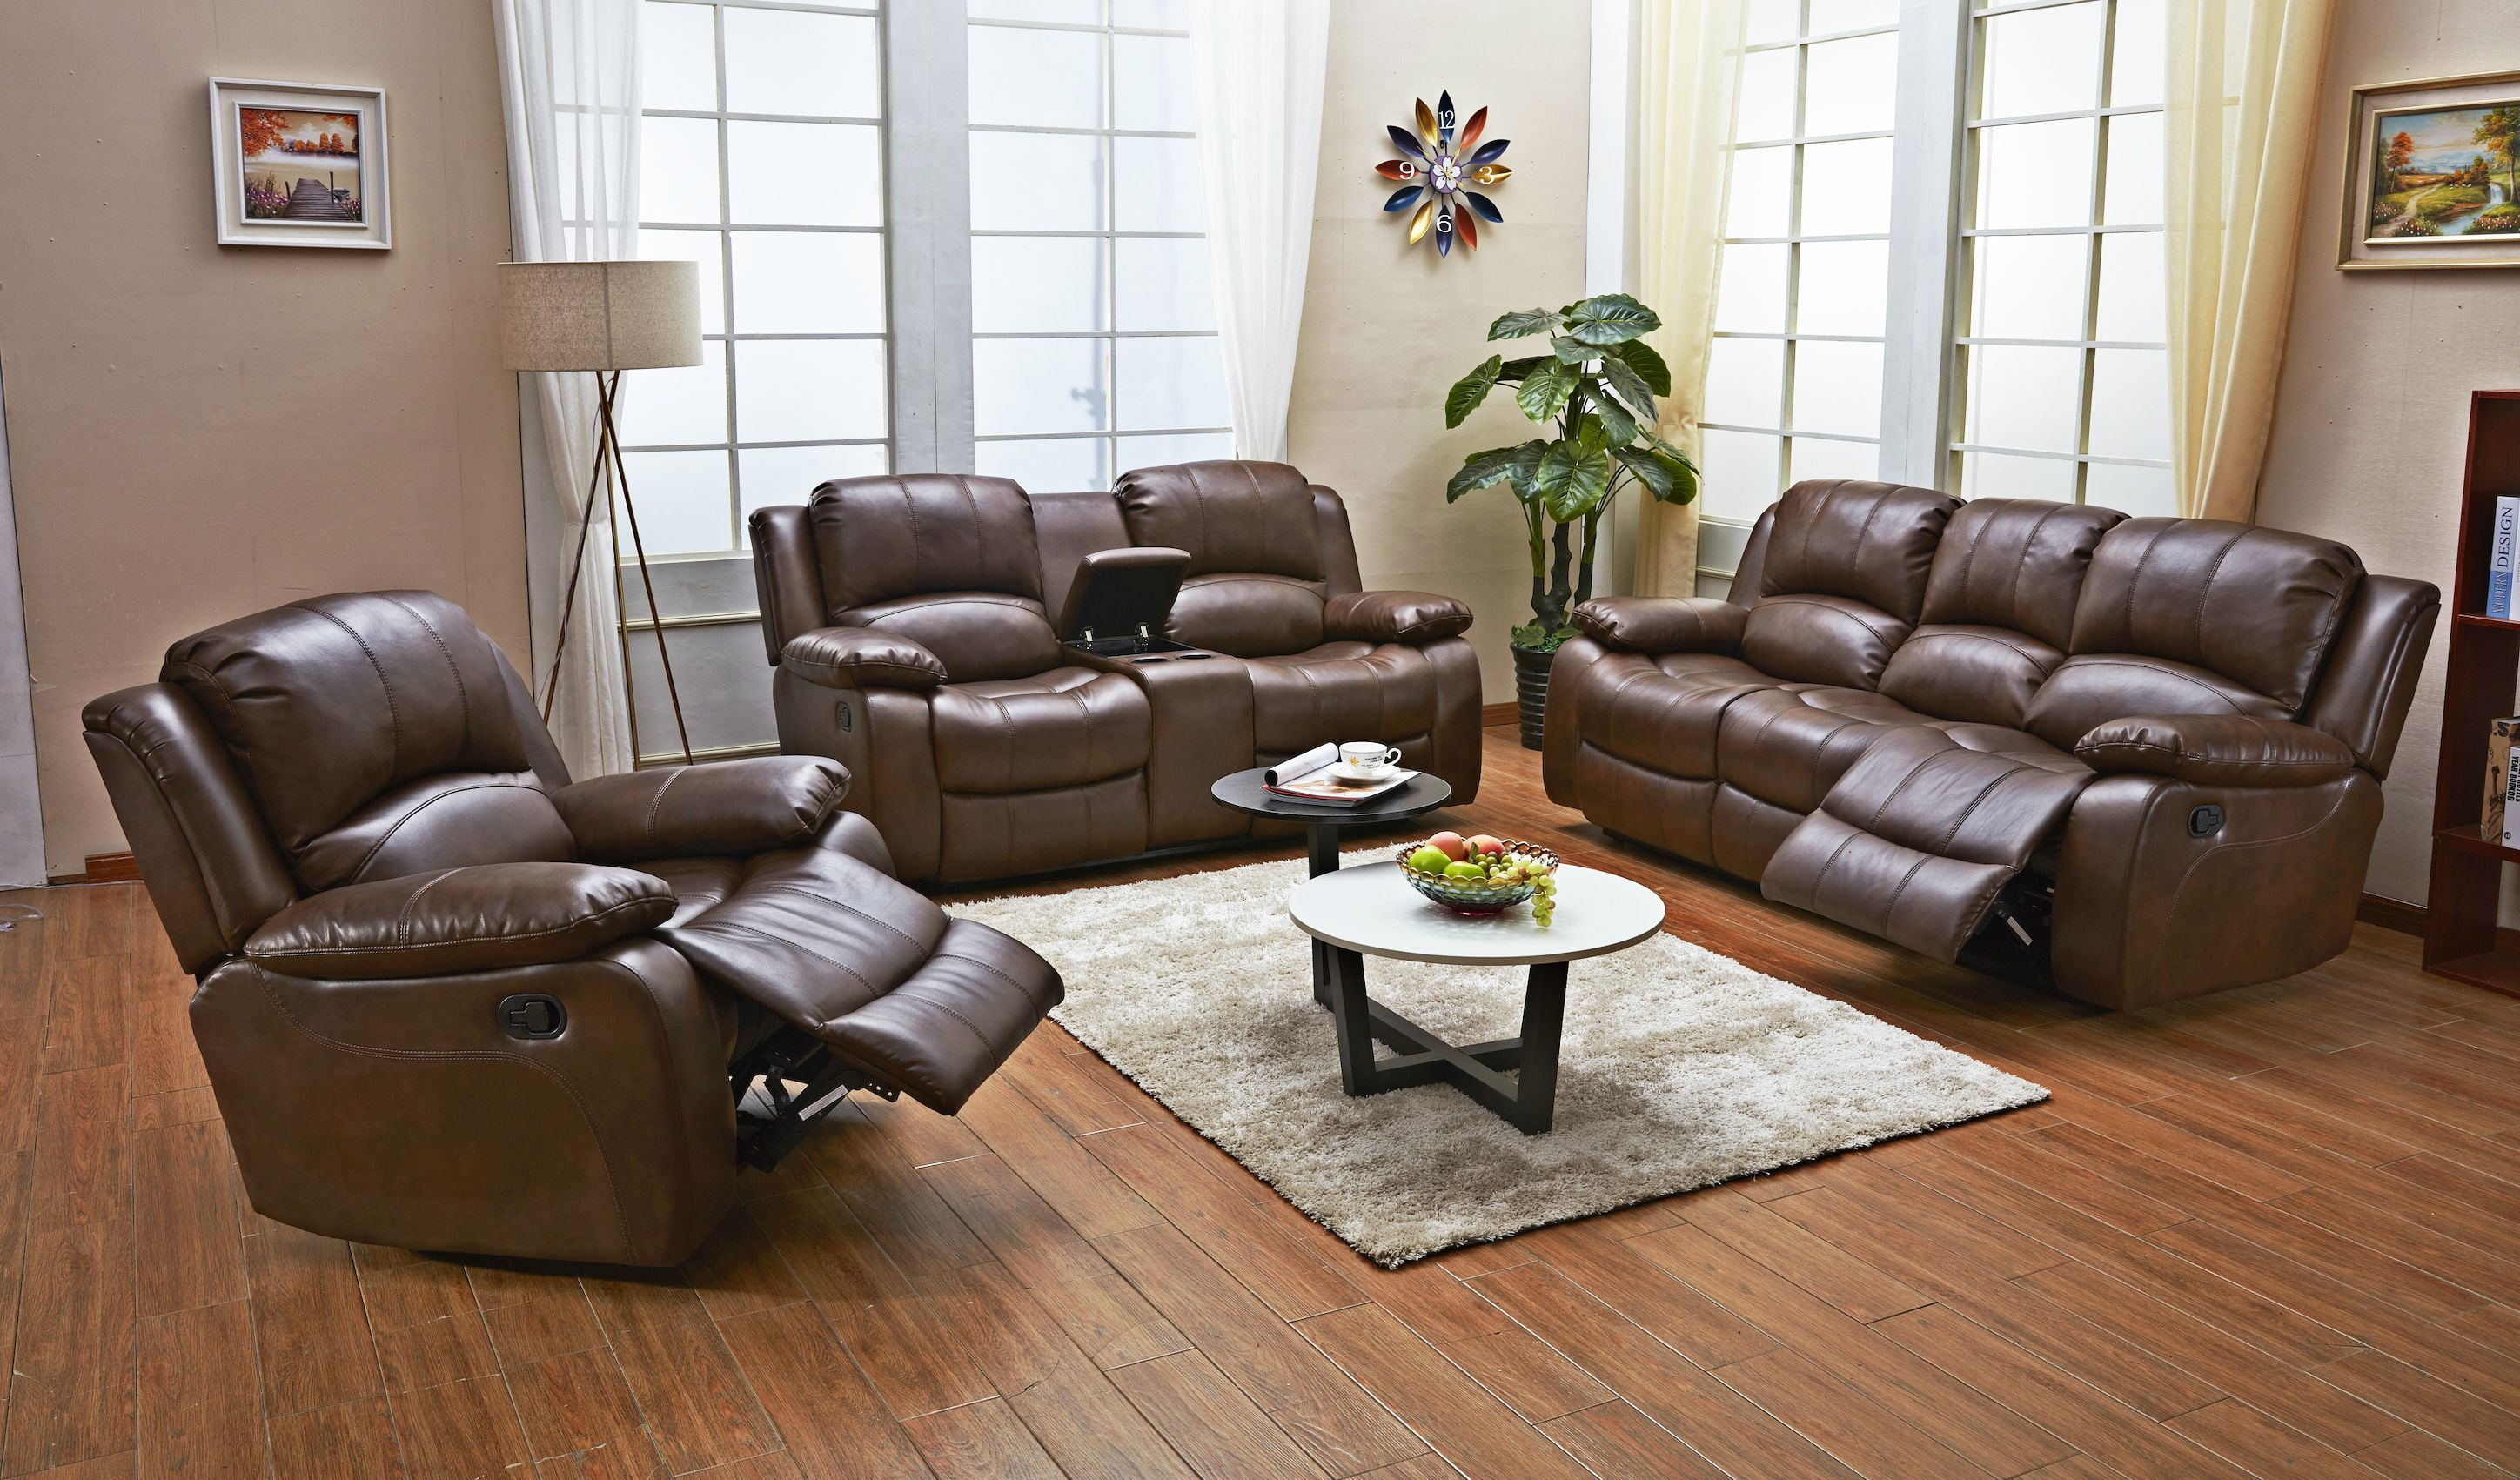 Betsy Furniture 2PC Bonded Leather Recliner Set Living Room Set Loveseat 8018 Sofa Brown, Living Room Set 3+2 